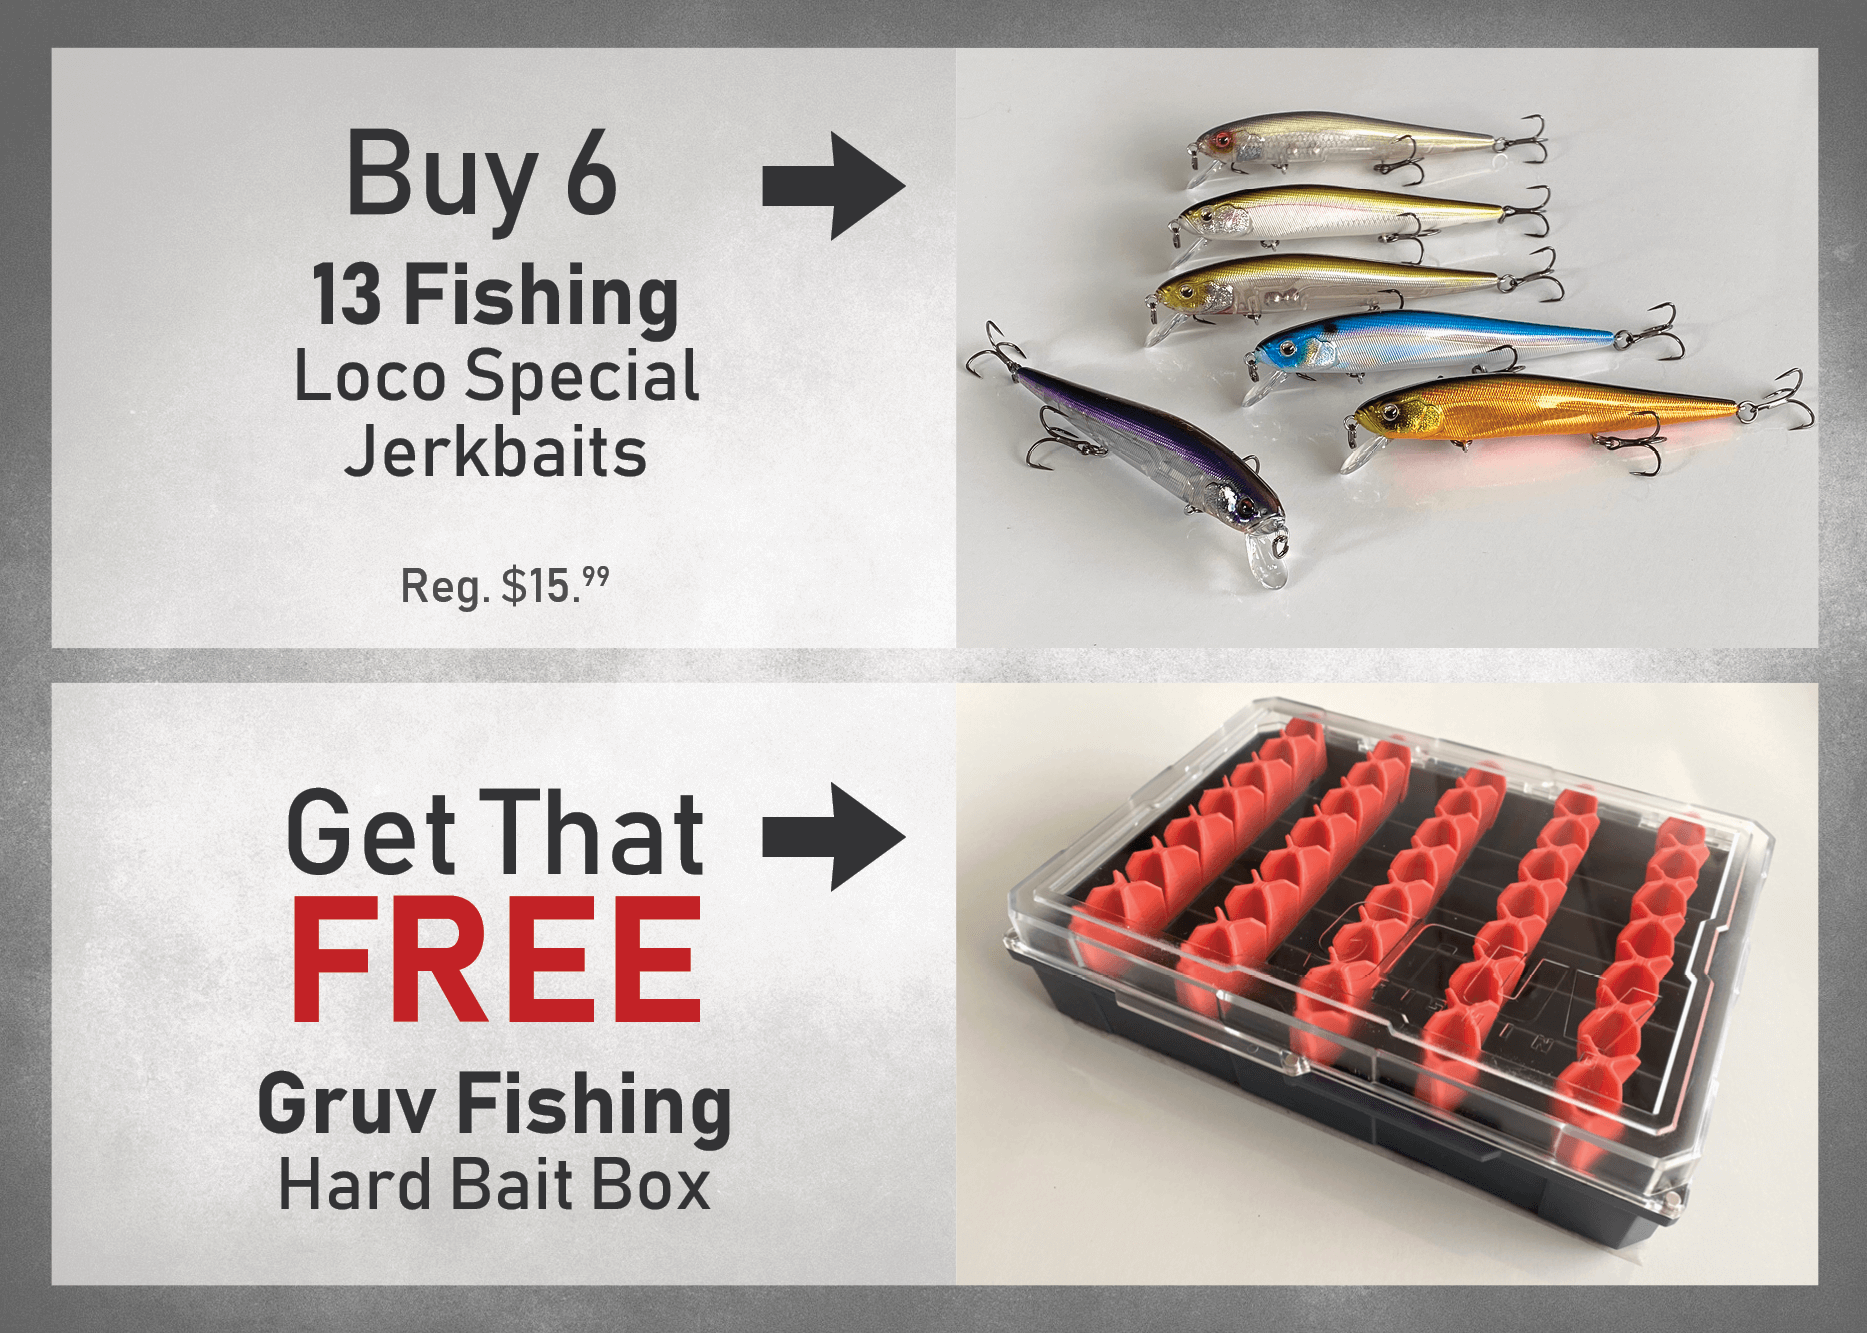 BUY six 13 Fishing Loco Special Jerkbaits & GET a FREE Gruv Fishing Hard Bait Box!